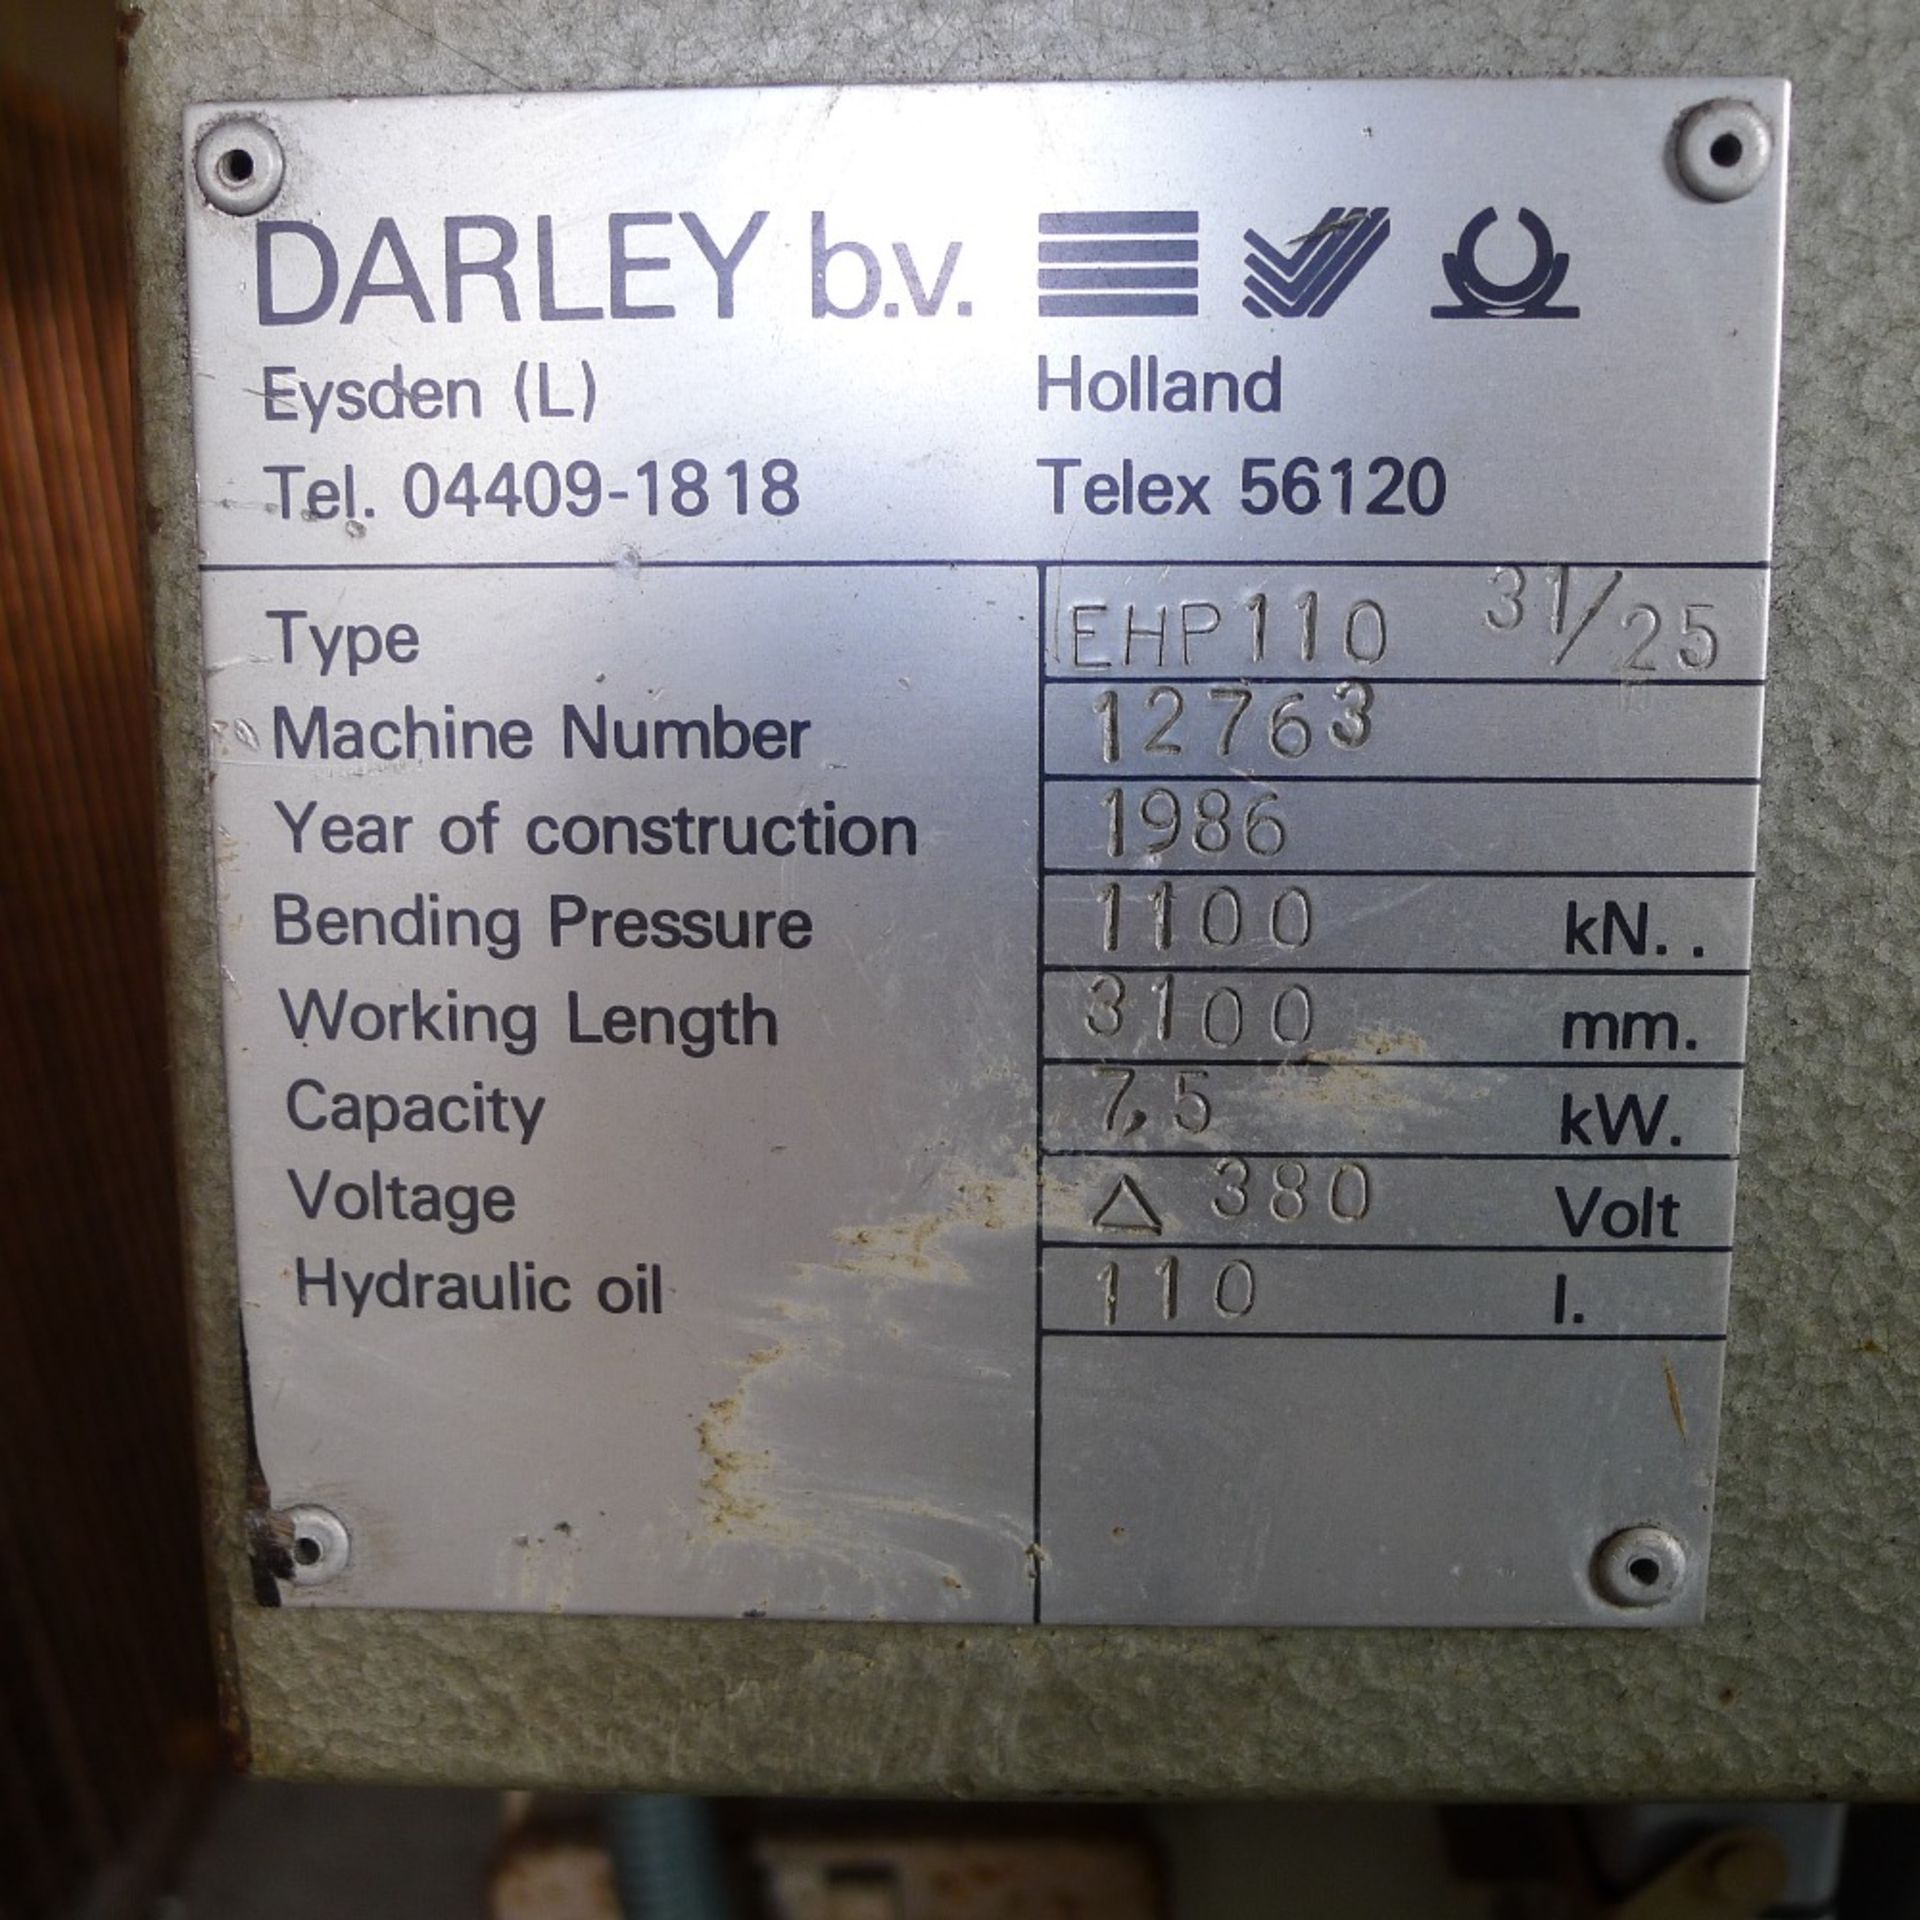 1 Darley press brake model EHP110 31/25, machine number 12763, YOM 1986, bending pressure 1100kN, - Image 5 of 10